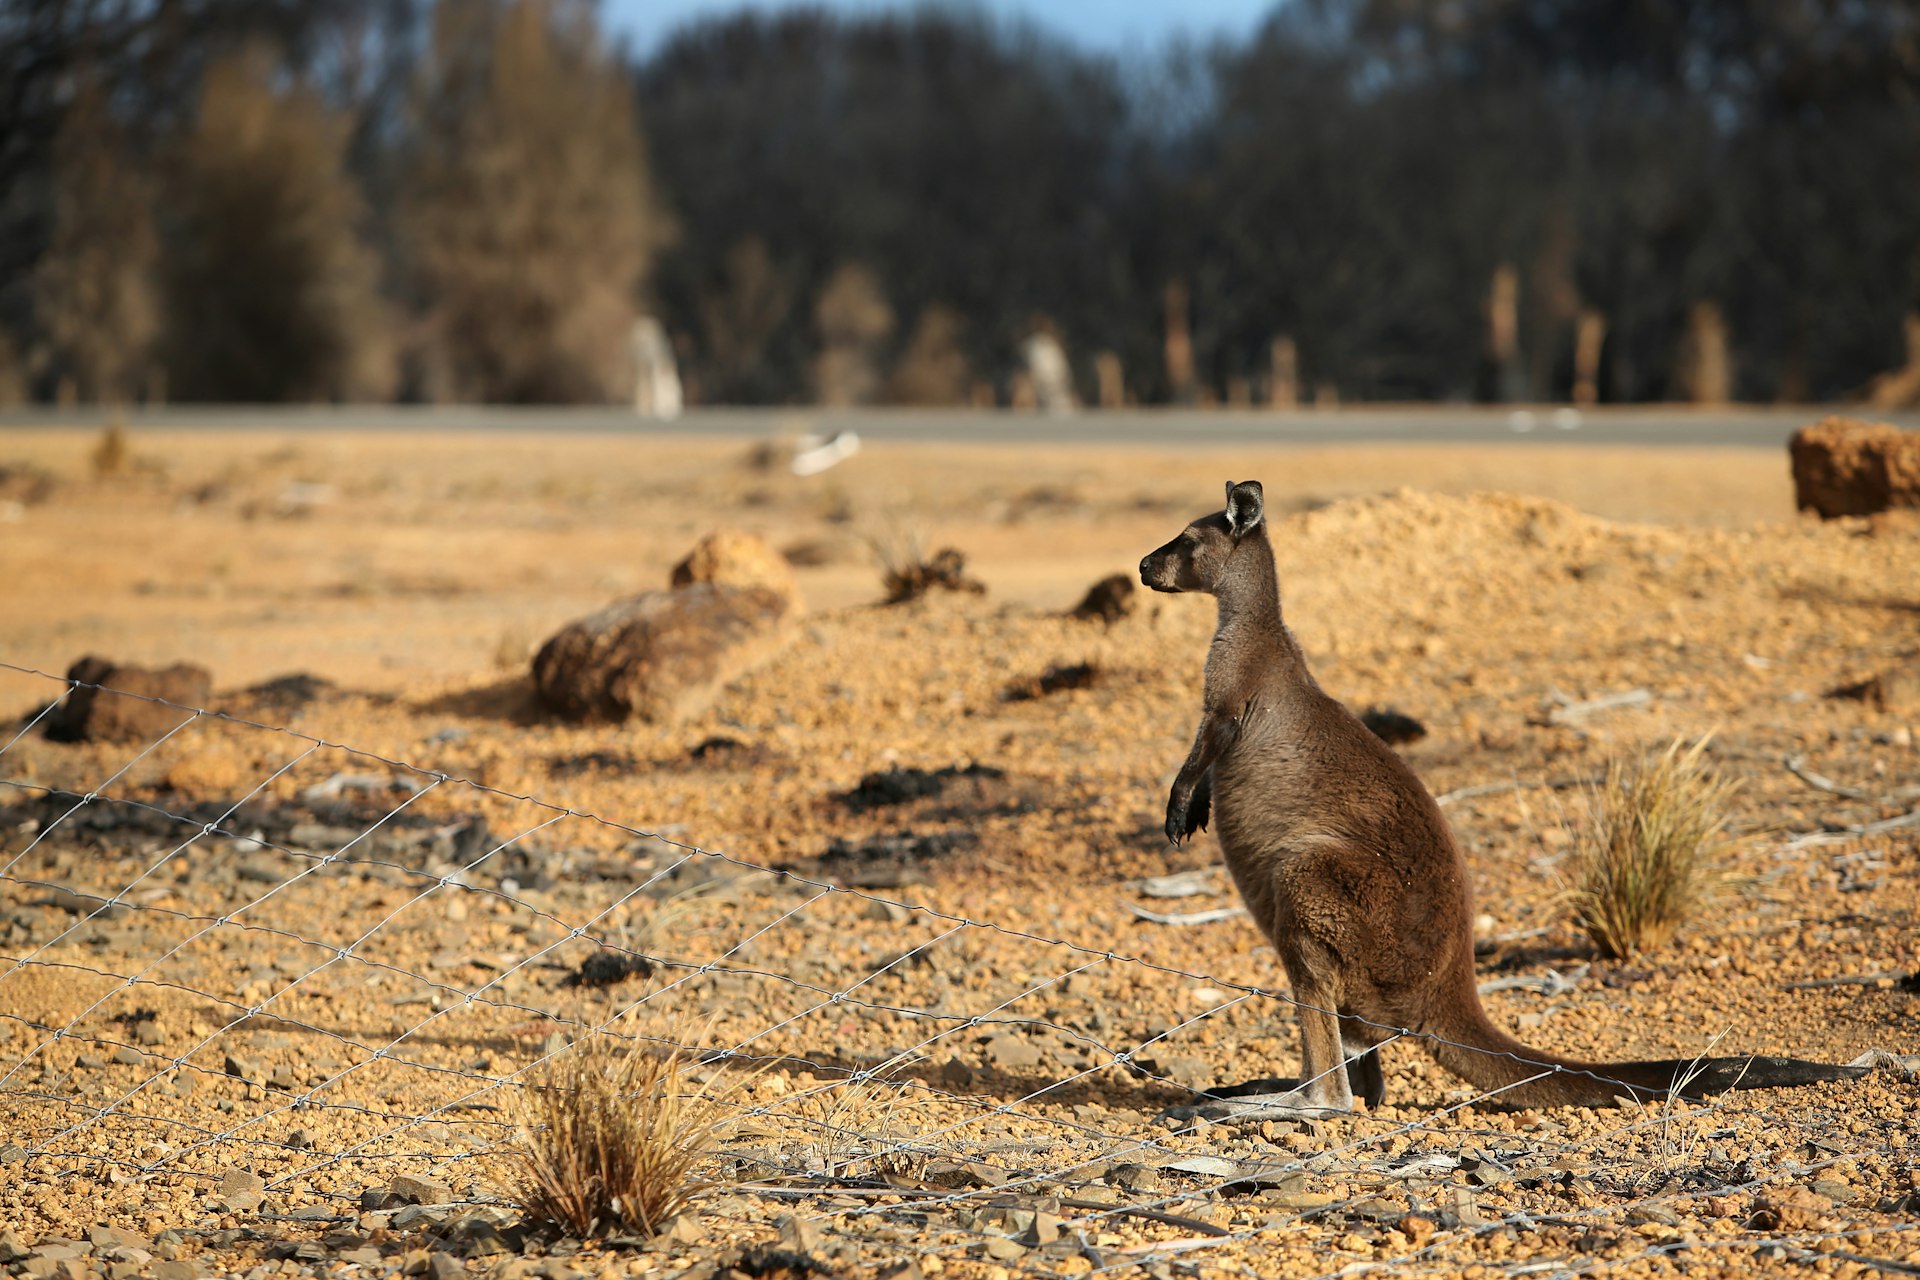  A kangaroo is seen at the edge of the bushfire damaged Flinders Chase National Park, Kangaroo Island, Australia